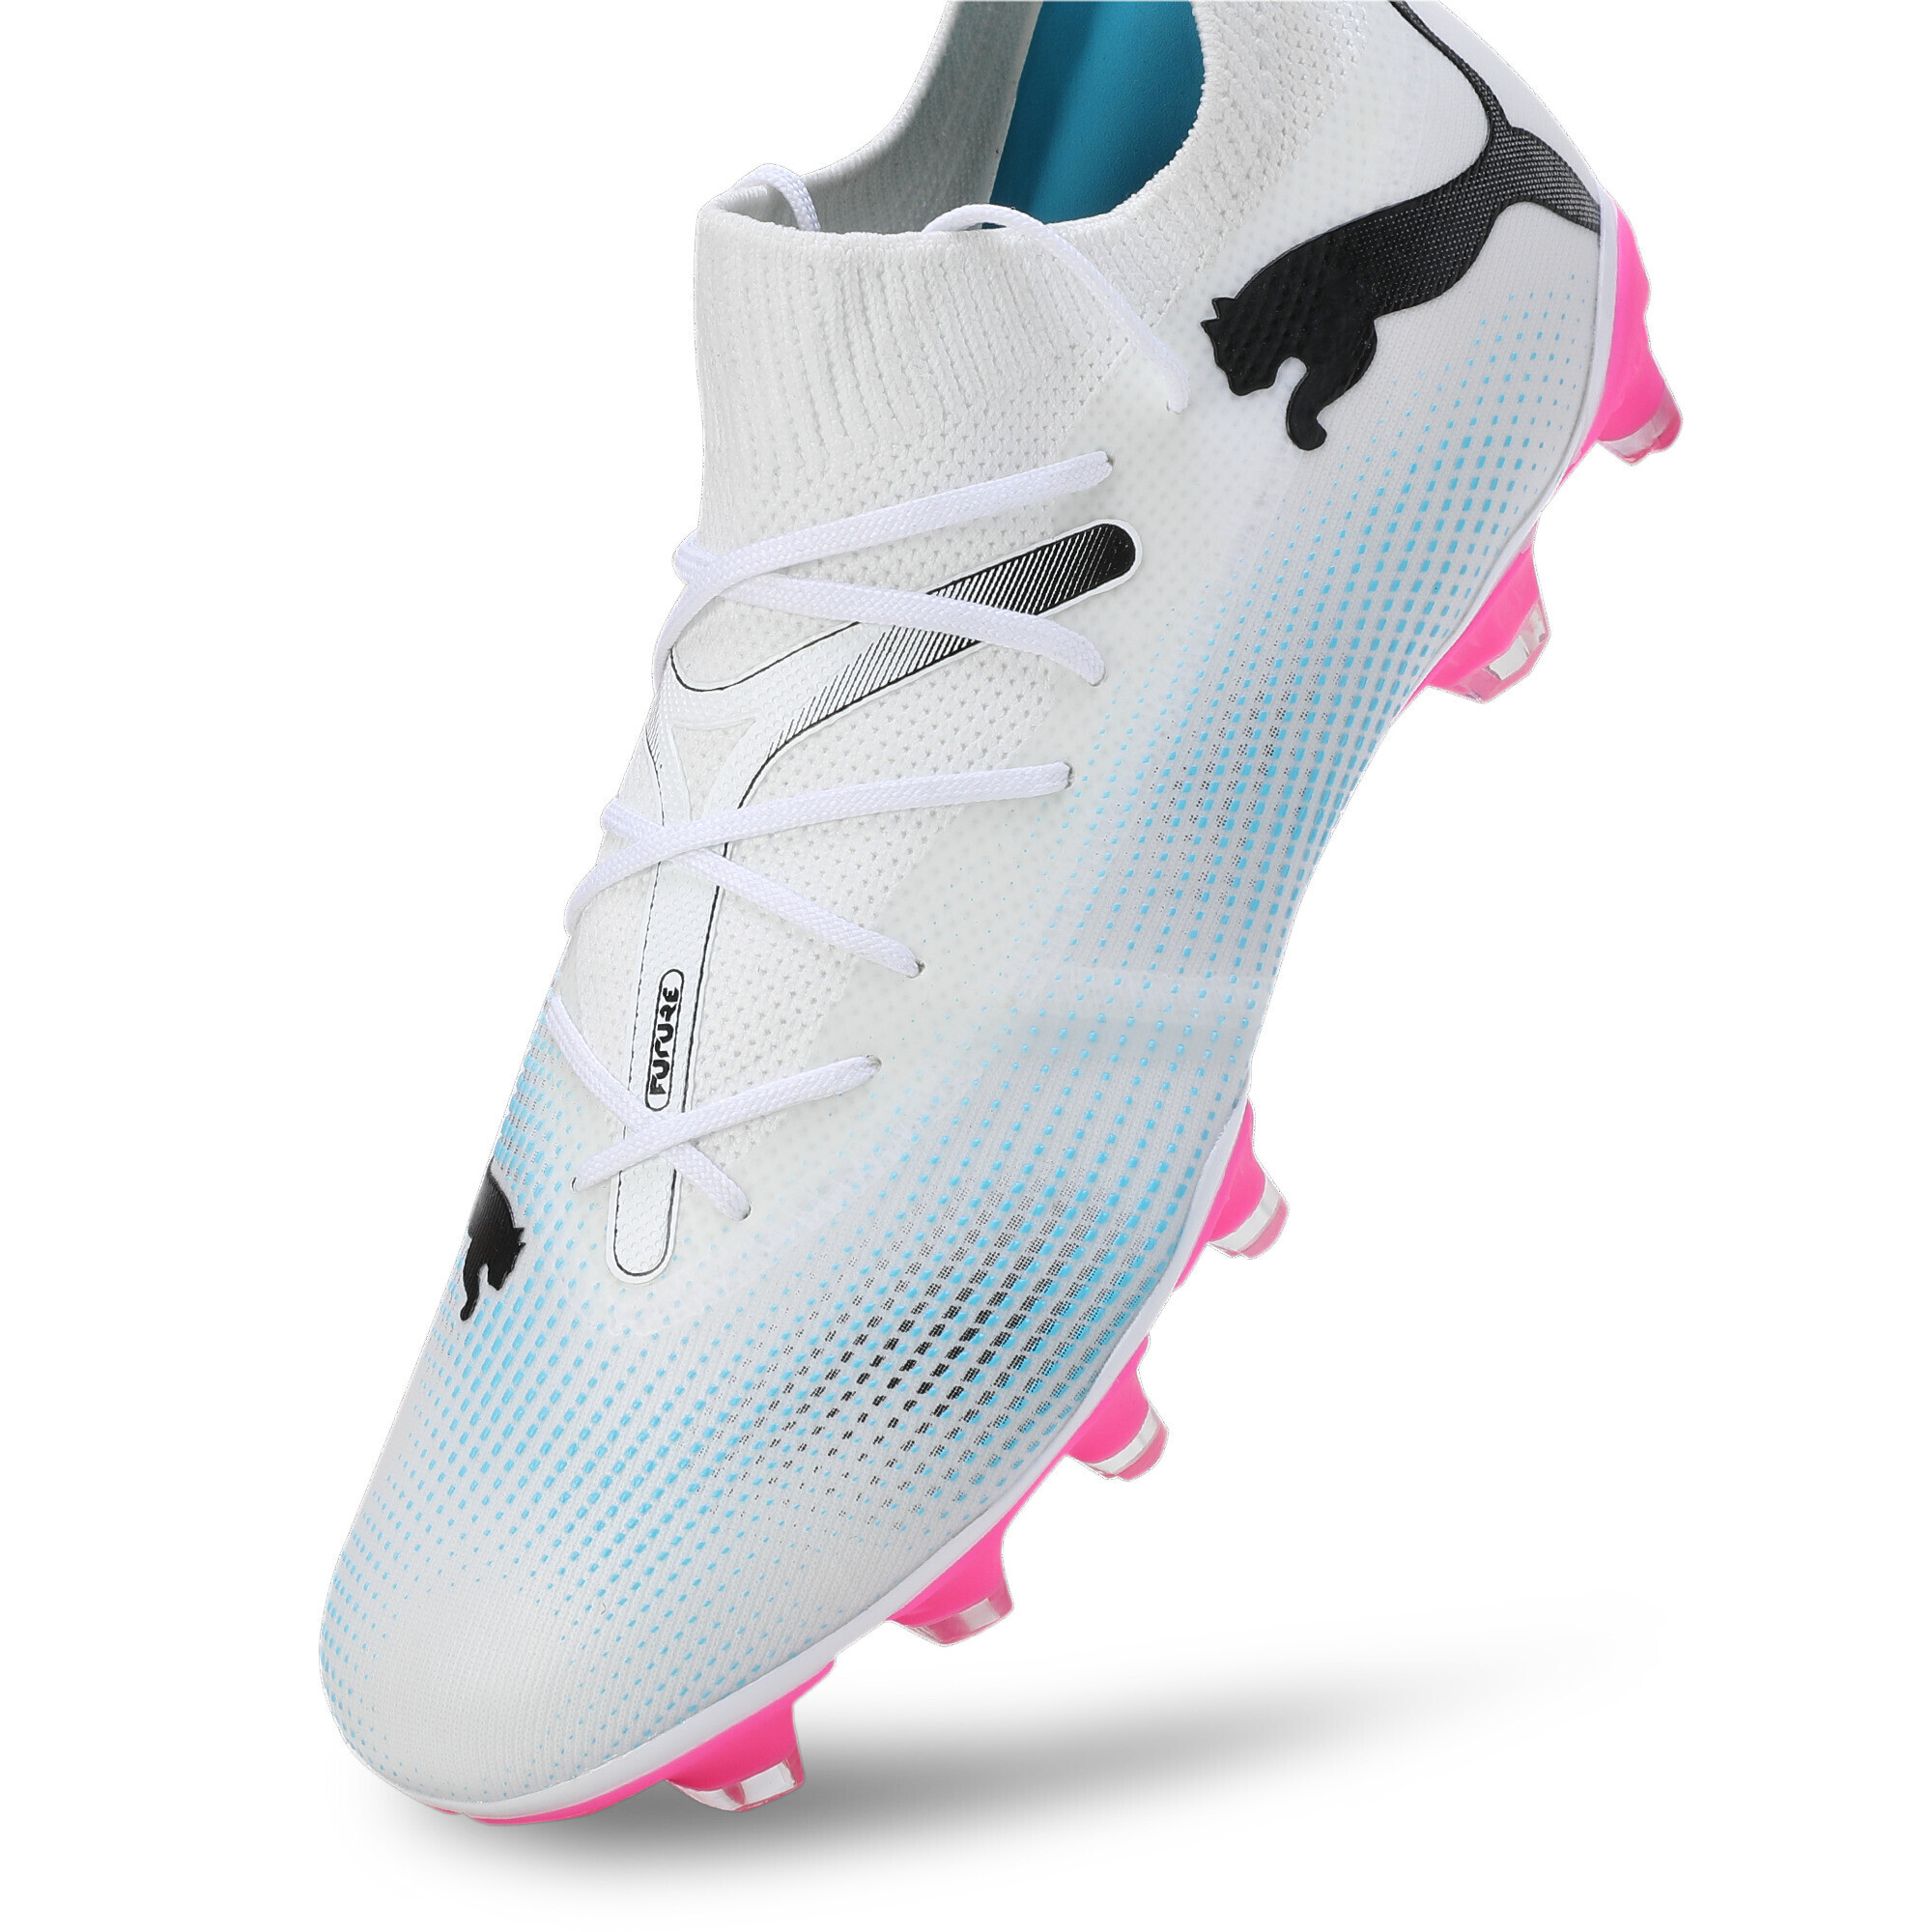 Women's PUMA FUTURE 7 MATCH FG/AG Football Boots In White/Pink, Size EU 37